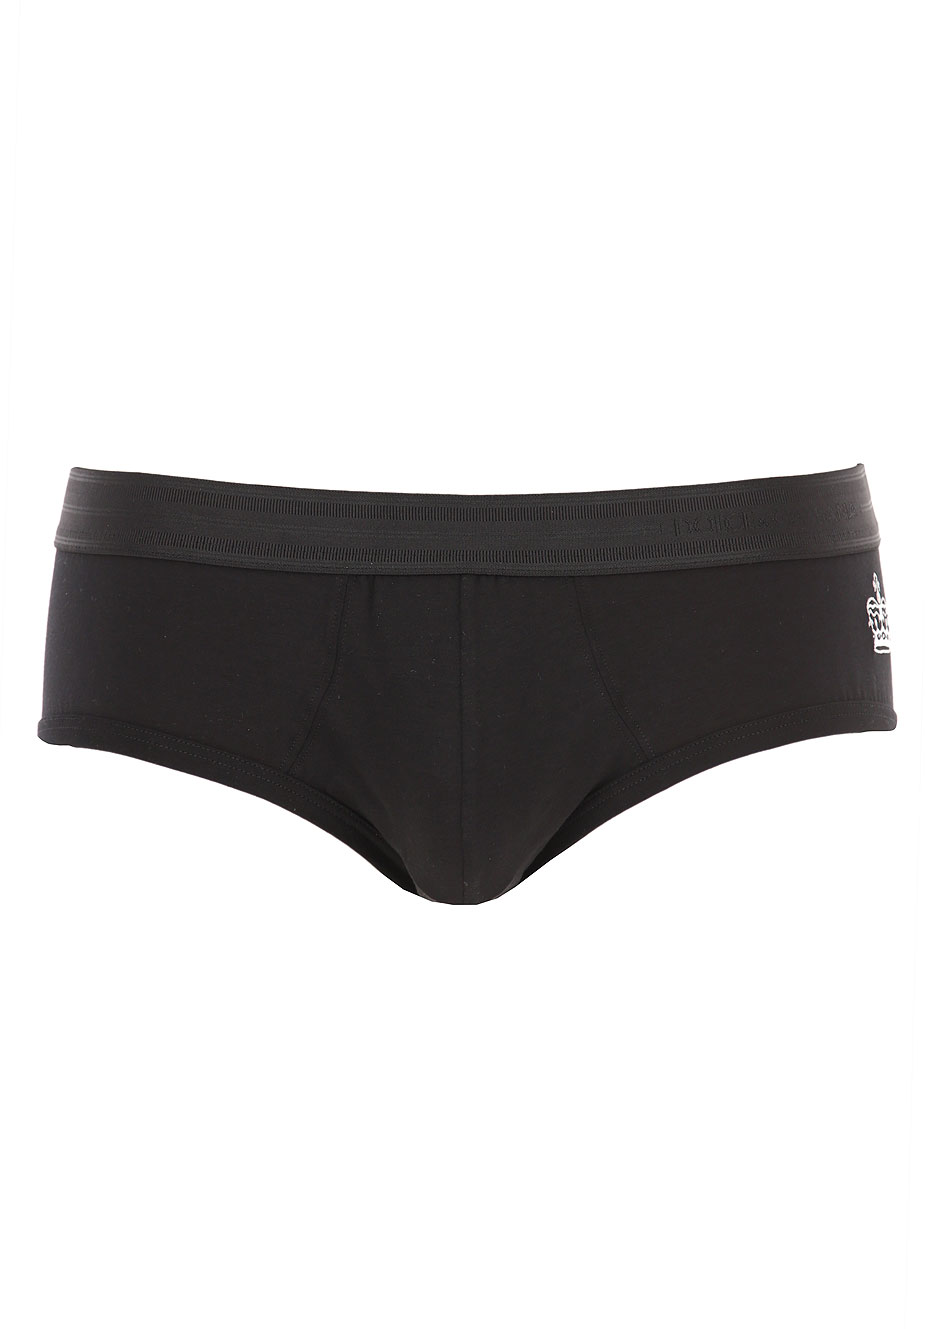 Mens Underwear Dolce & Gabbana, Style code: m3b69j-fueb0-n0000